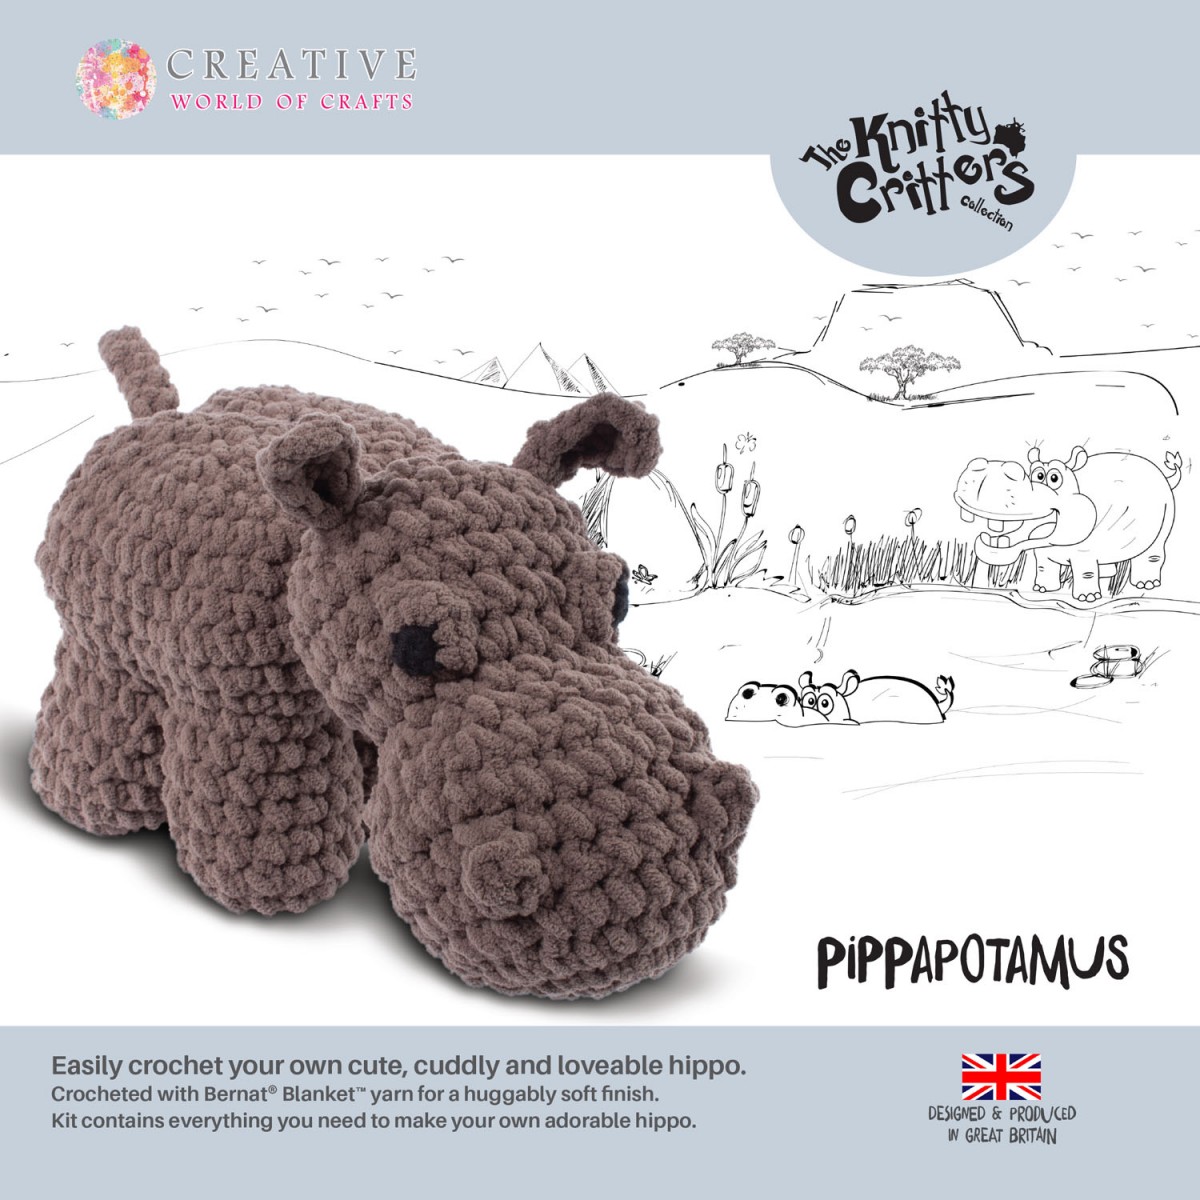 Disney Crochet Kits - Dumbo